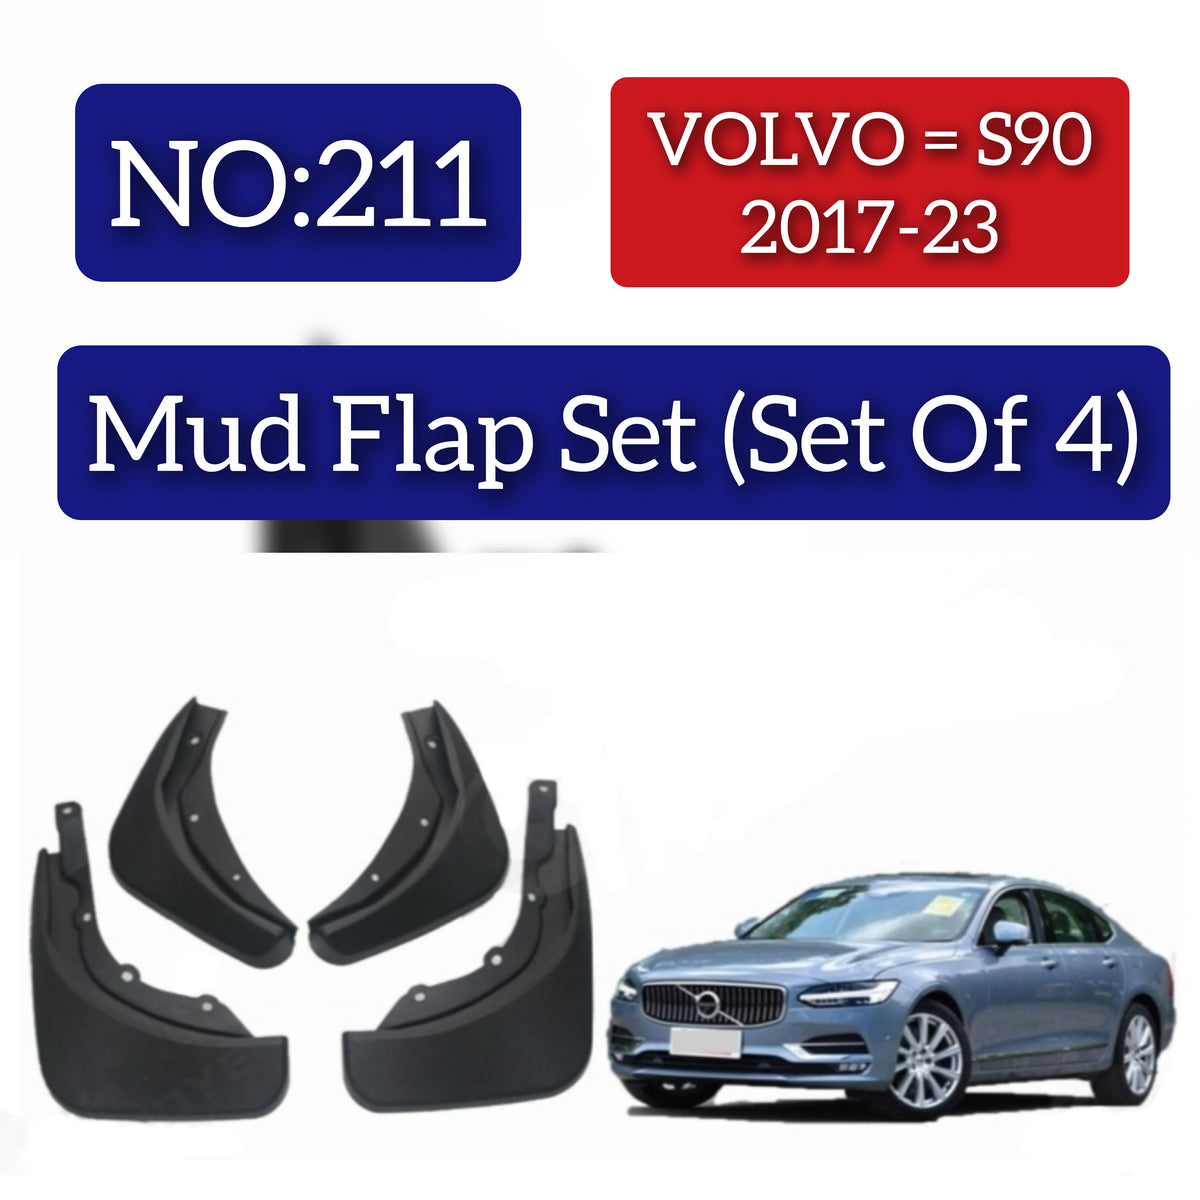 Volvo S90 2017-23 Mud Flap Set (Set of 4) Tag 211